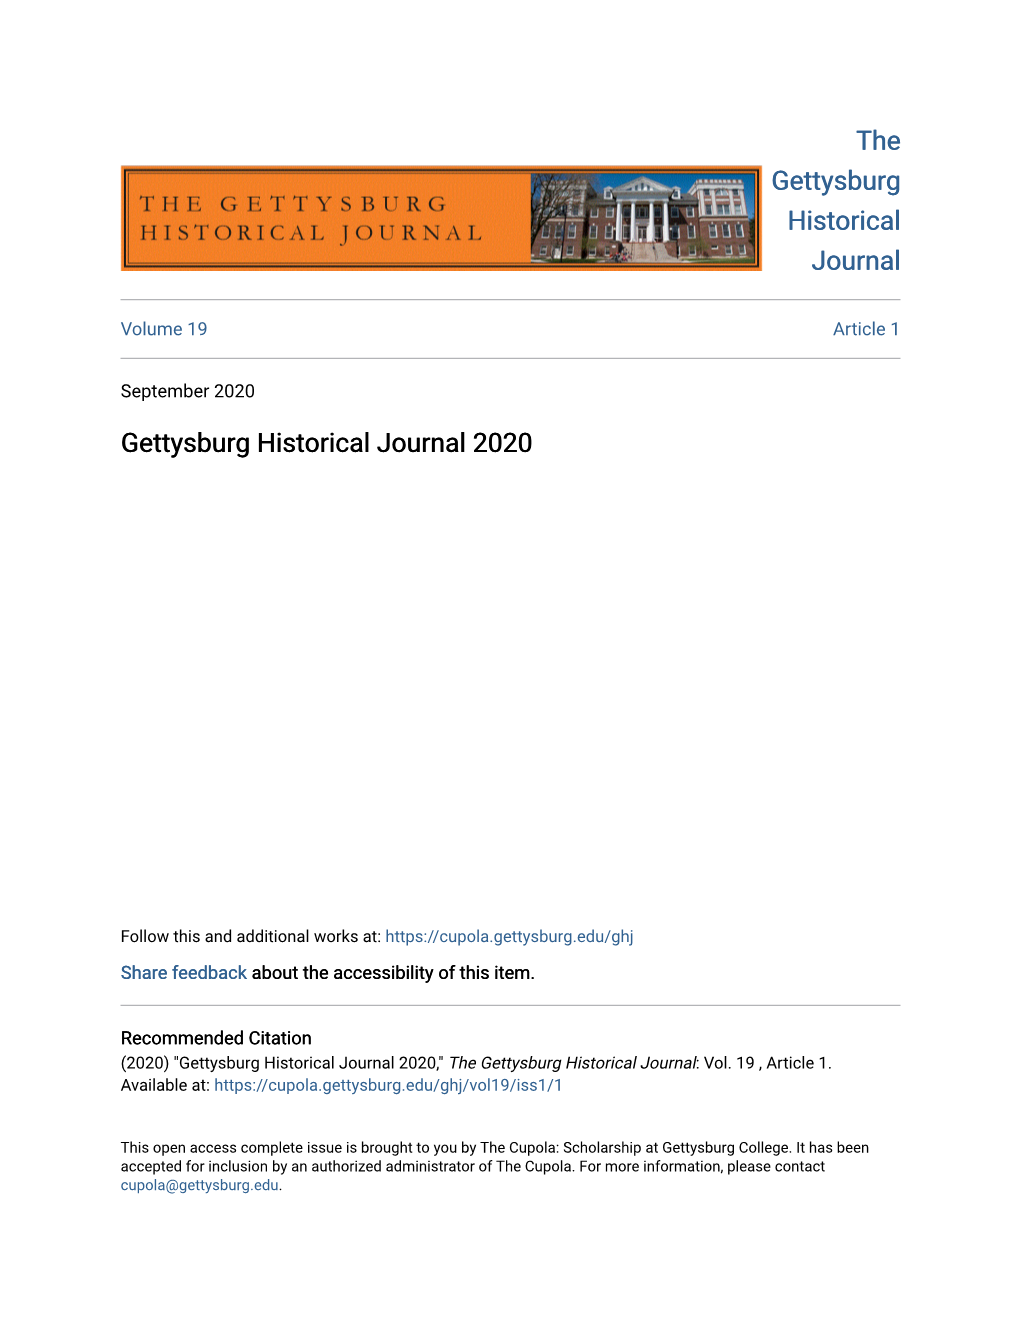 Gettysburg Historical Journal 2020